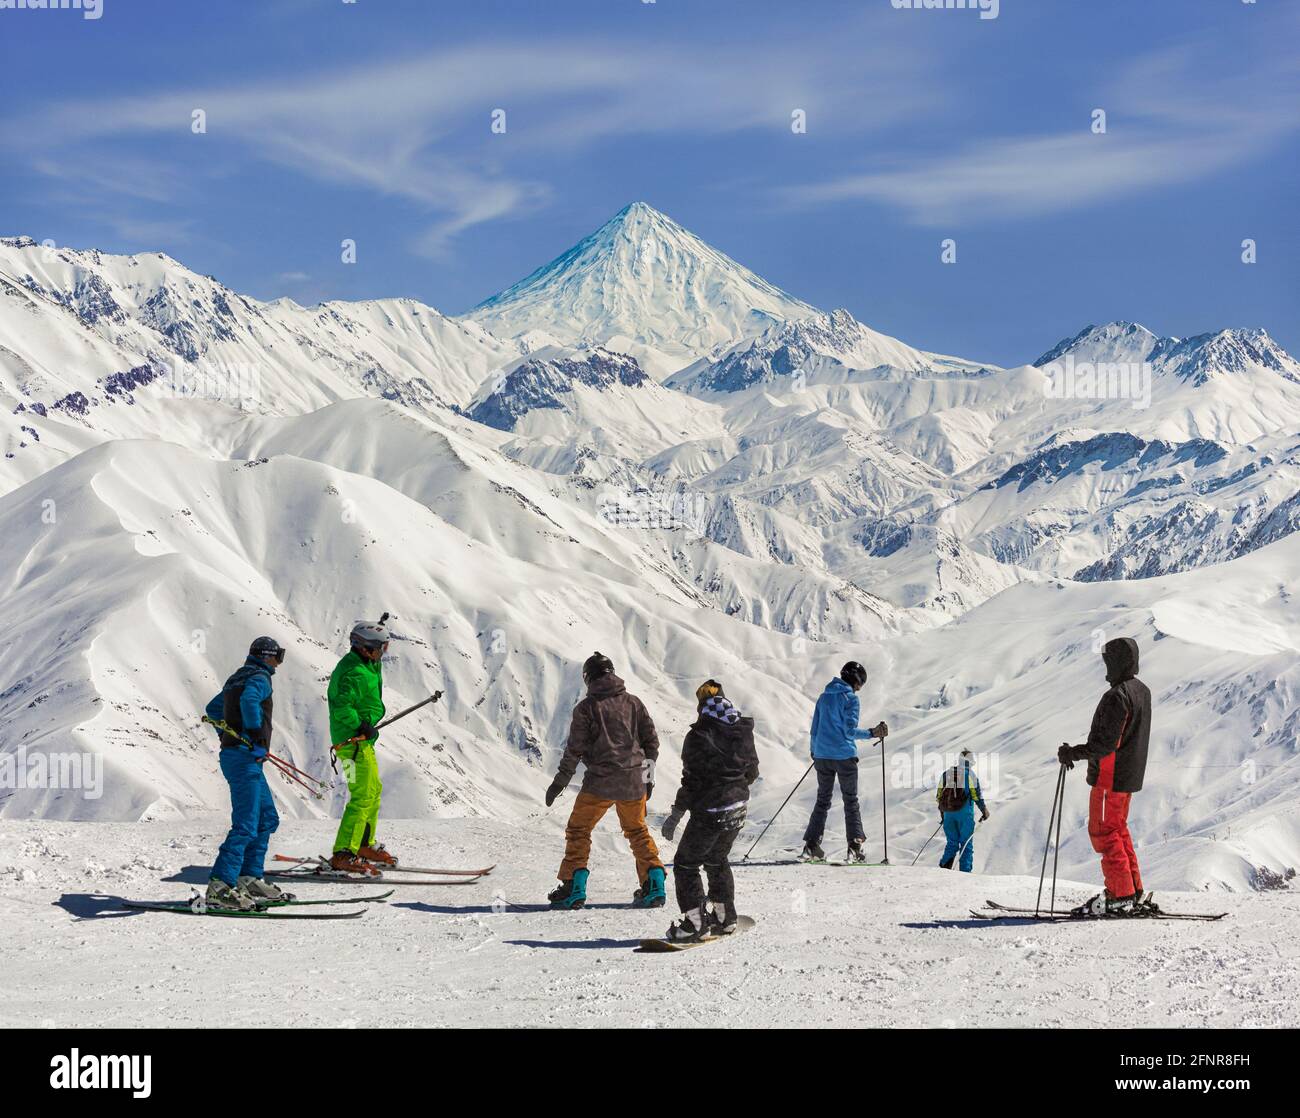 The view of skiers and Mount Damavand from Darbandsar ski resort in Tehran, Iran. Stock Photo